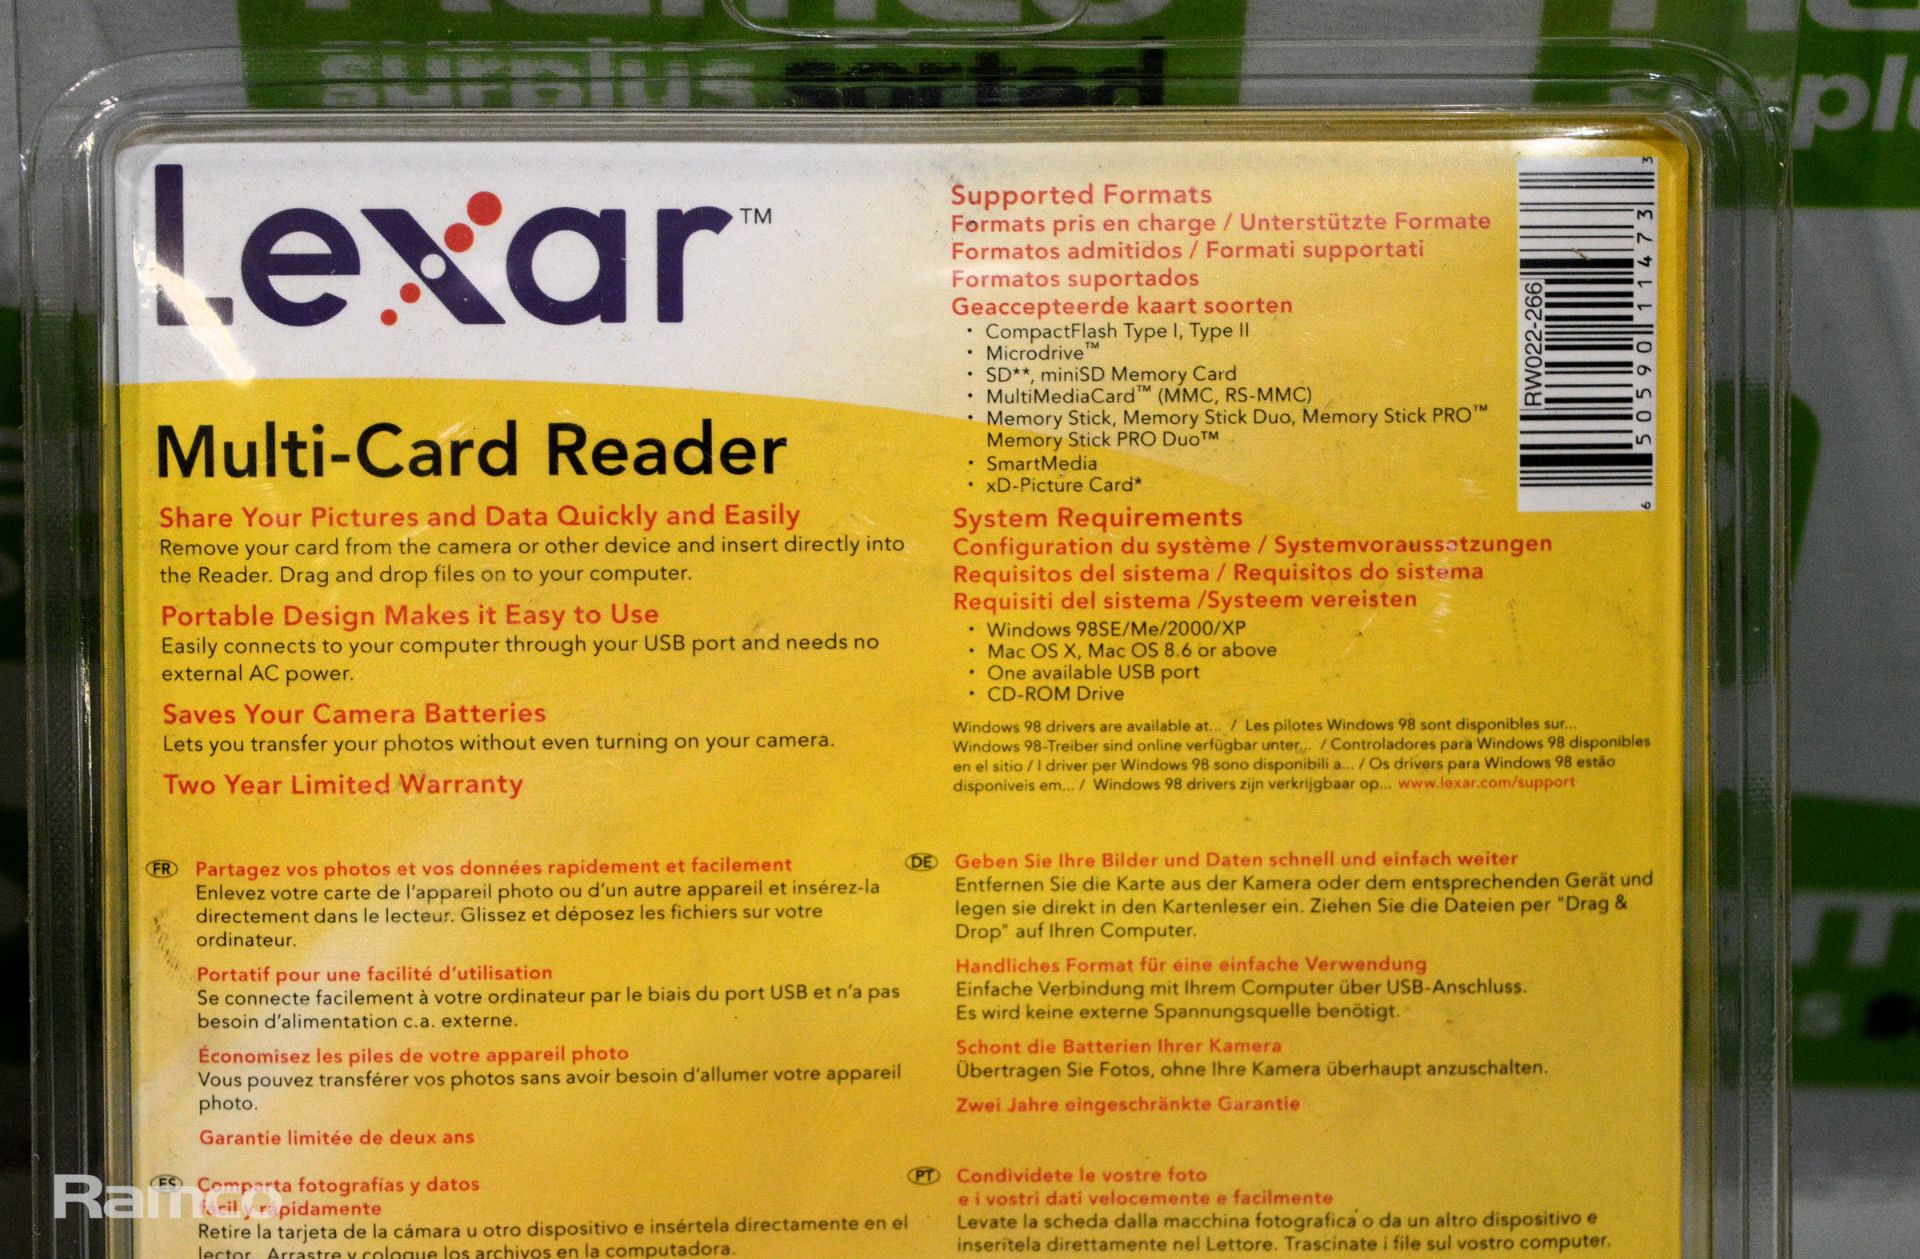 4x Lexar USB 2.0 Multi-Card Reader Units - Image 3 of 3